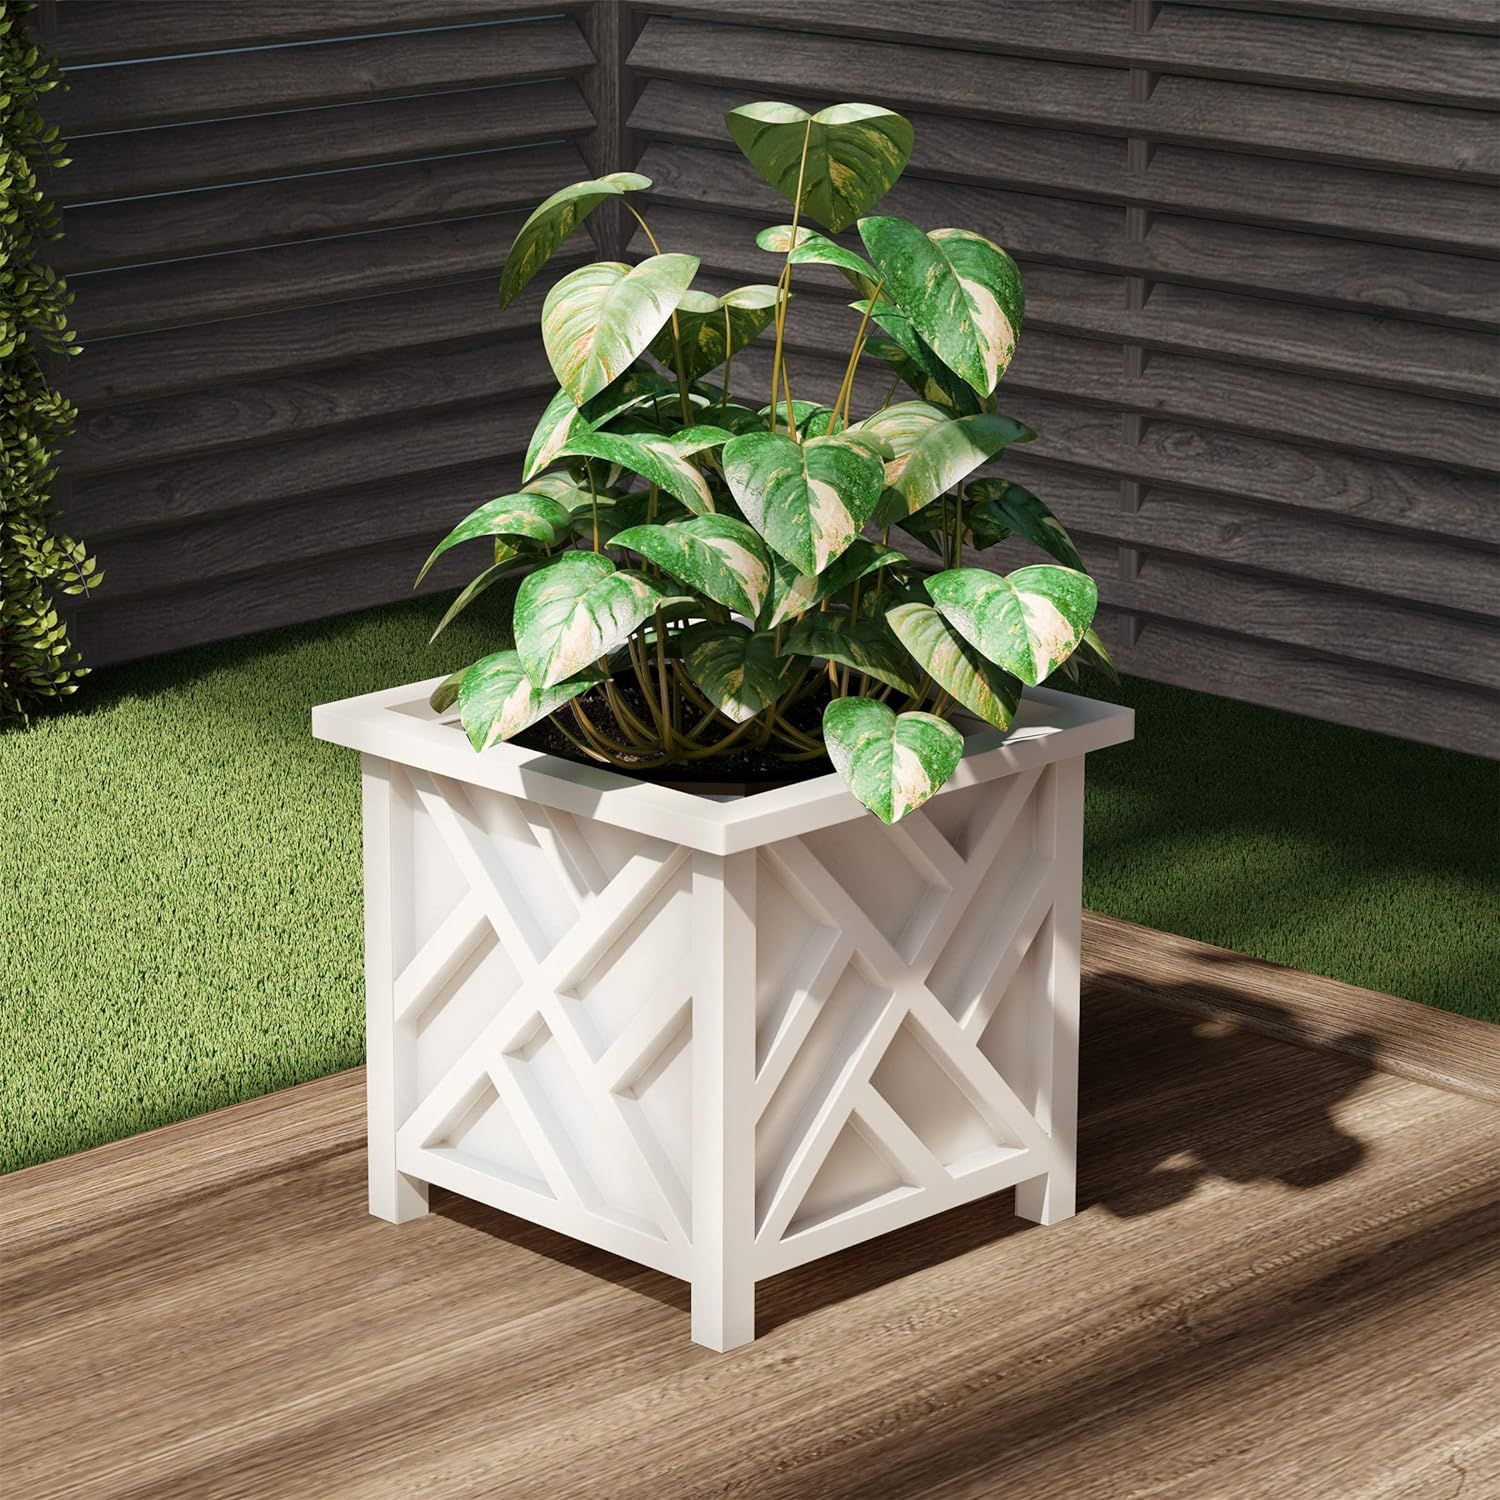 Pure Garden 50-LG5097 Square Planter Box-White Lattice Container for Flowers & Plants, Cream | Amazon (US)